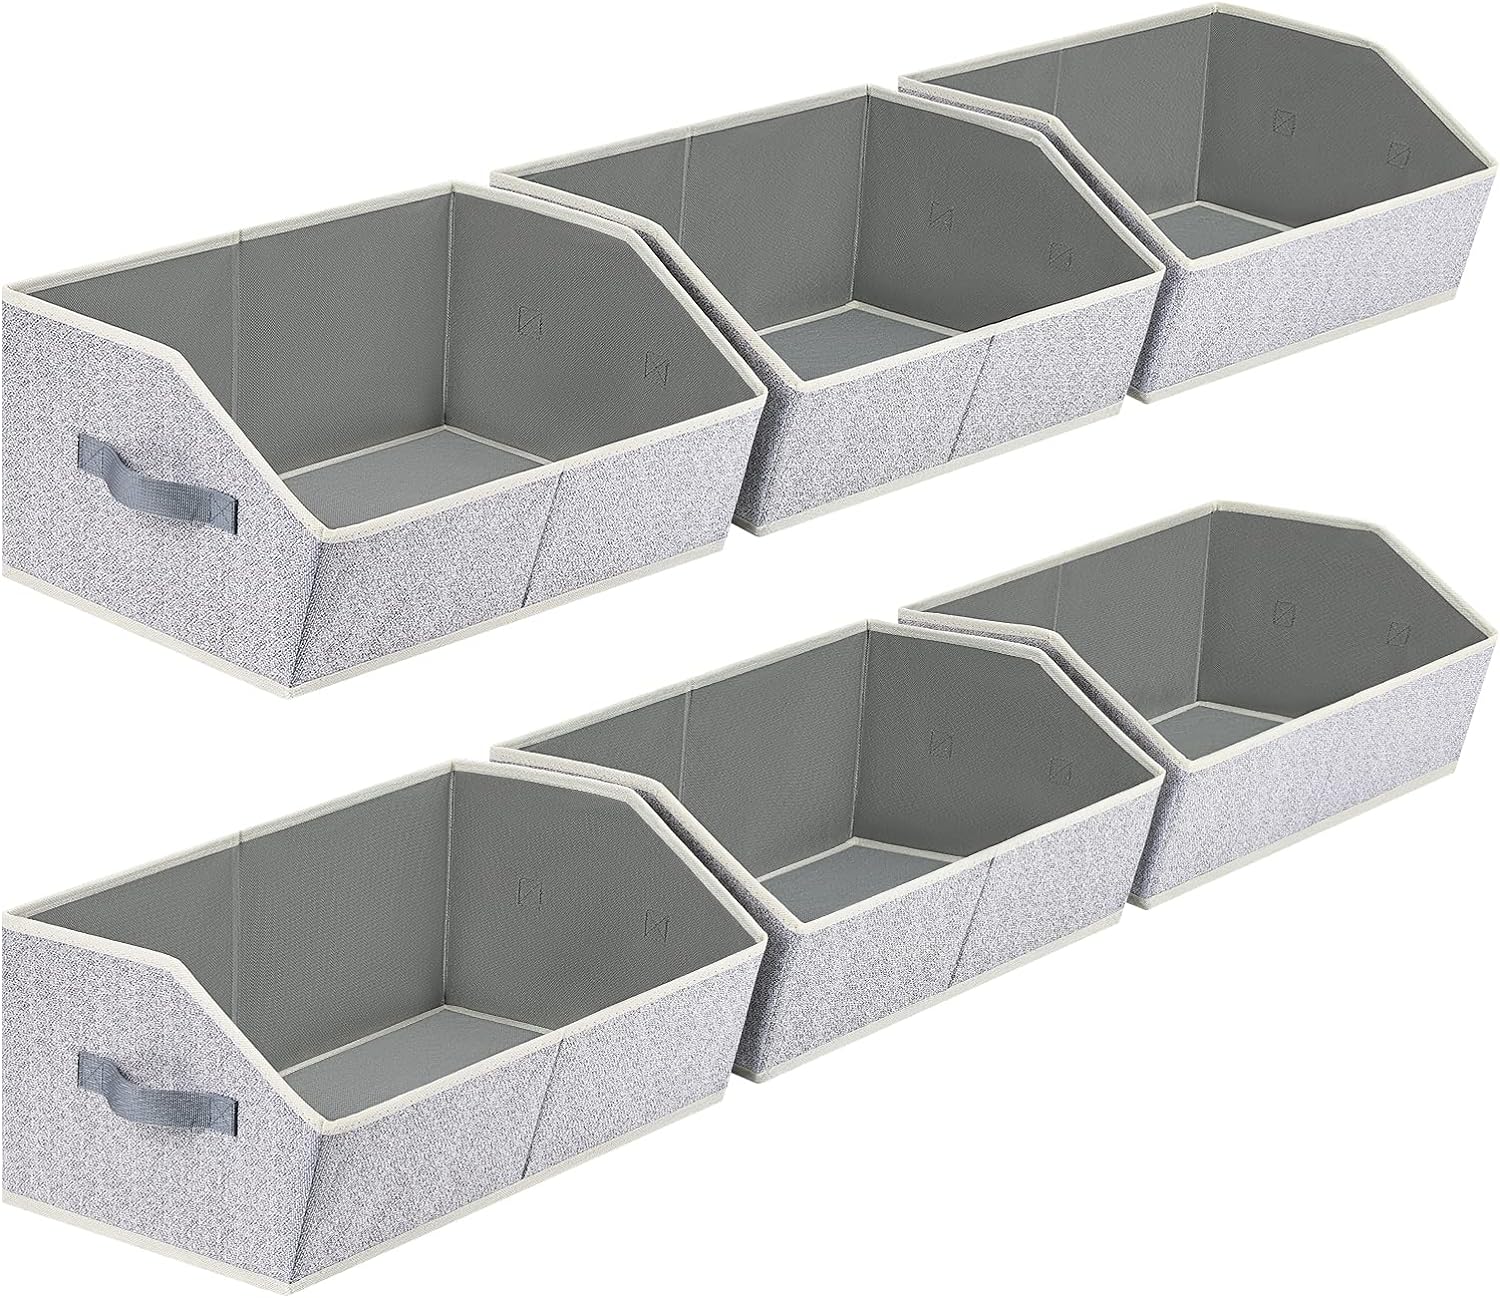 Trapezoid Storage Bins - Foldable Closet Organization, Fabric Storage Baskets for Shelves, Linen Closet Organizers and Storage for Toys, Clothes, 6 Packs (Blended)